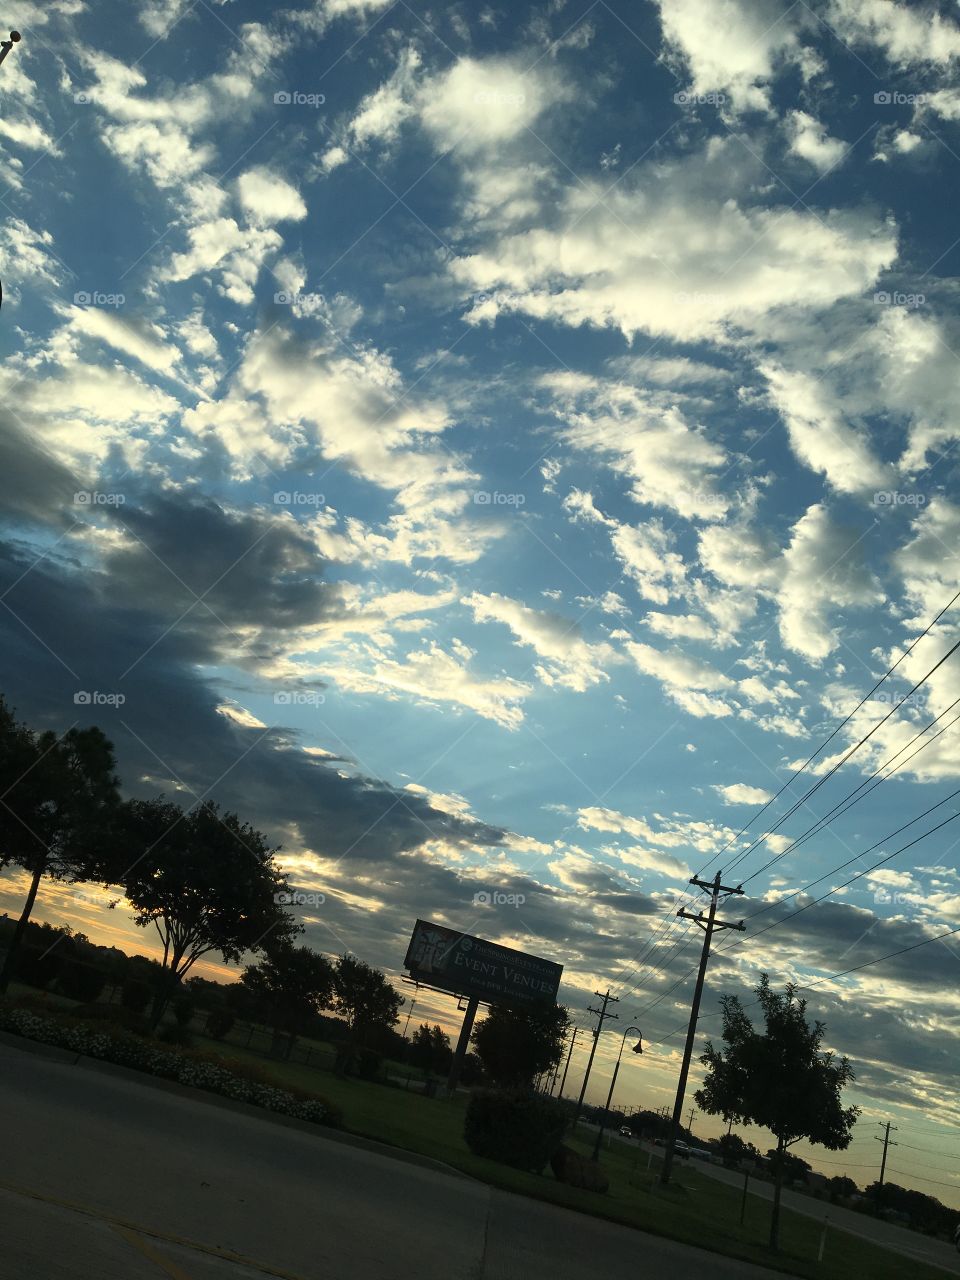 Cloudy sky in Texas